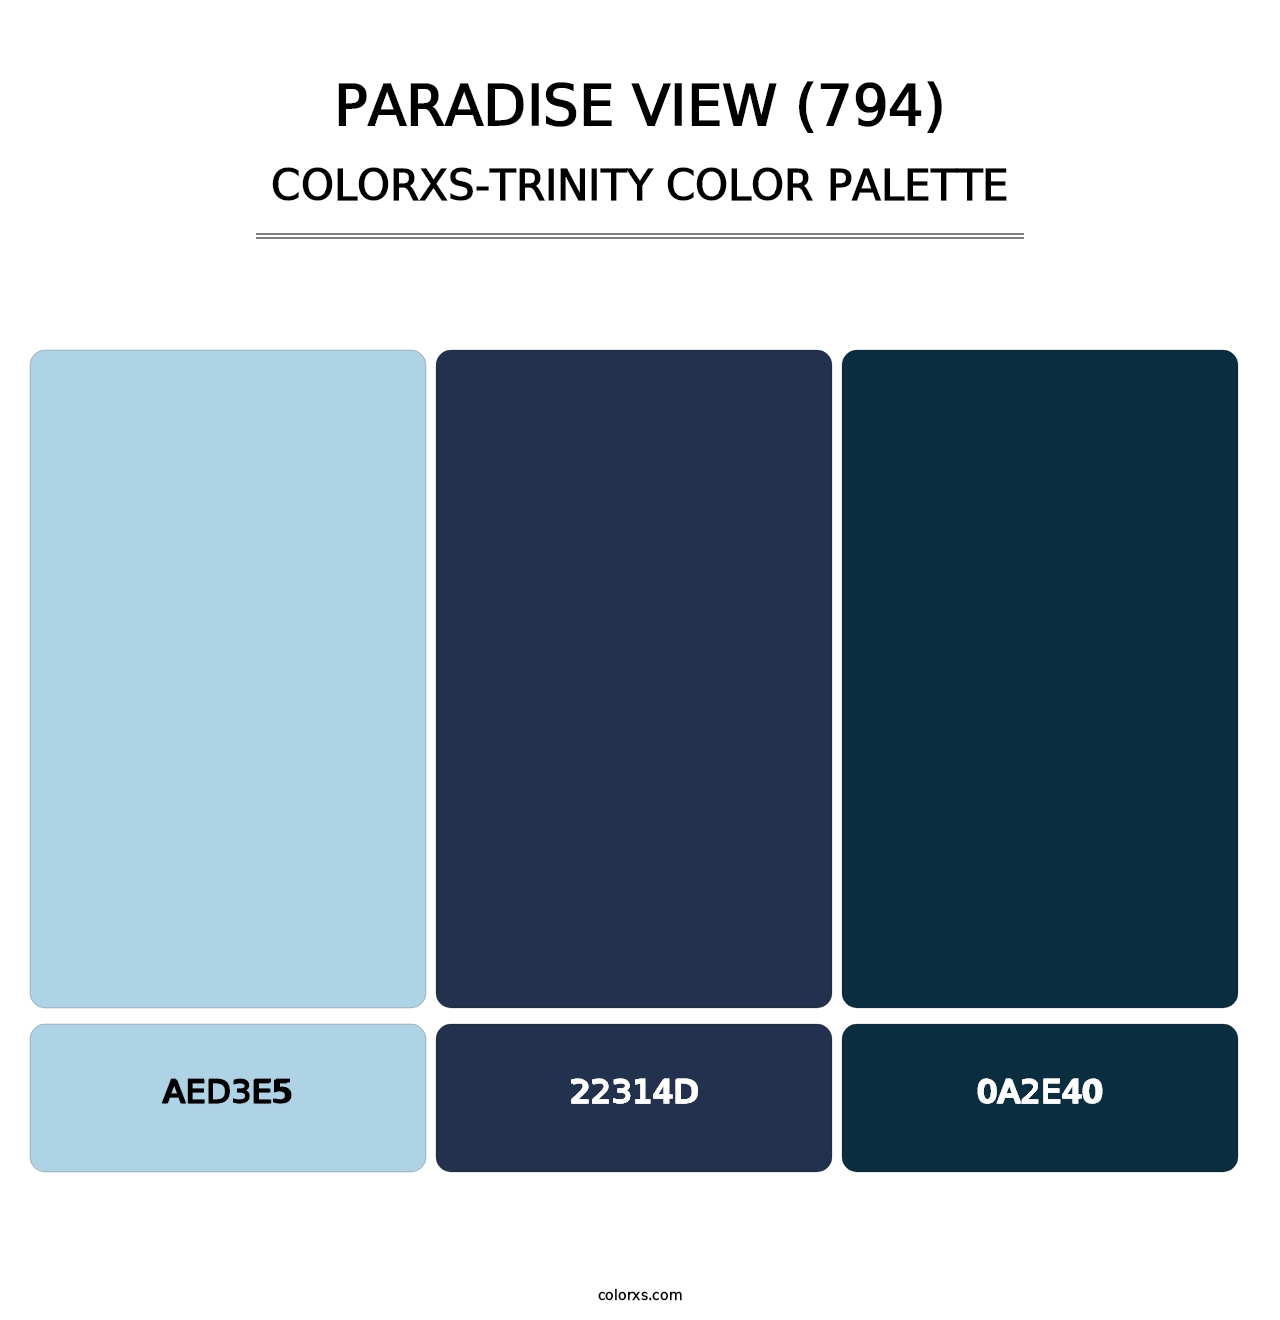 Paradise View (794) - Colorxs Trinity Palette